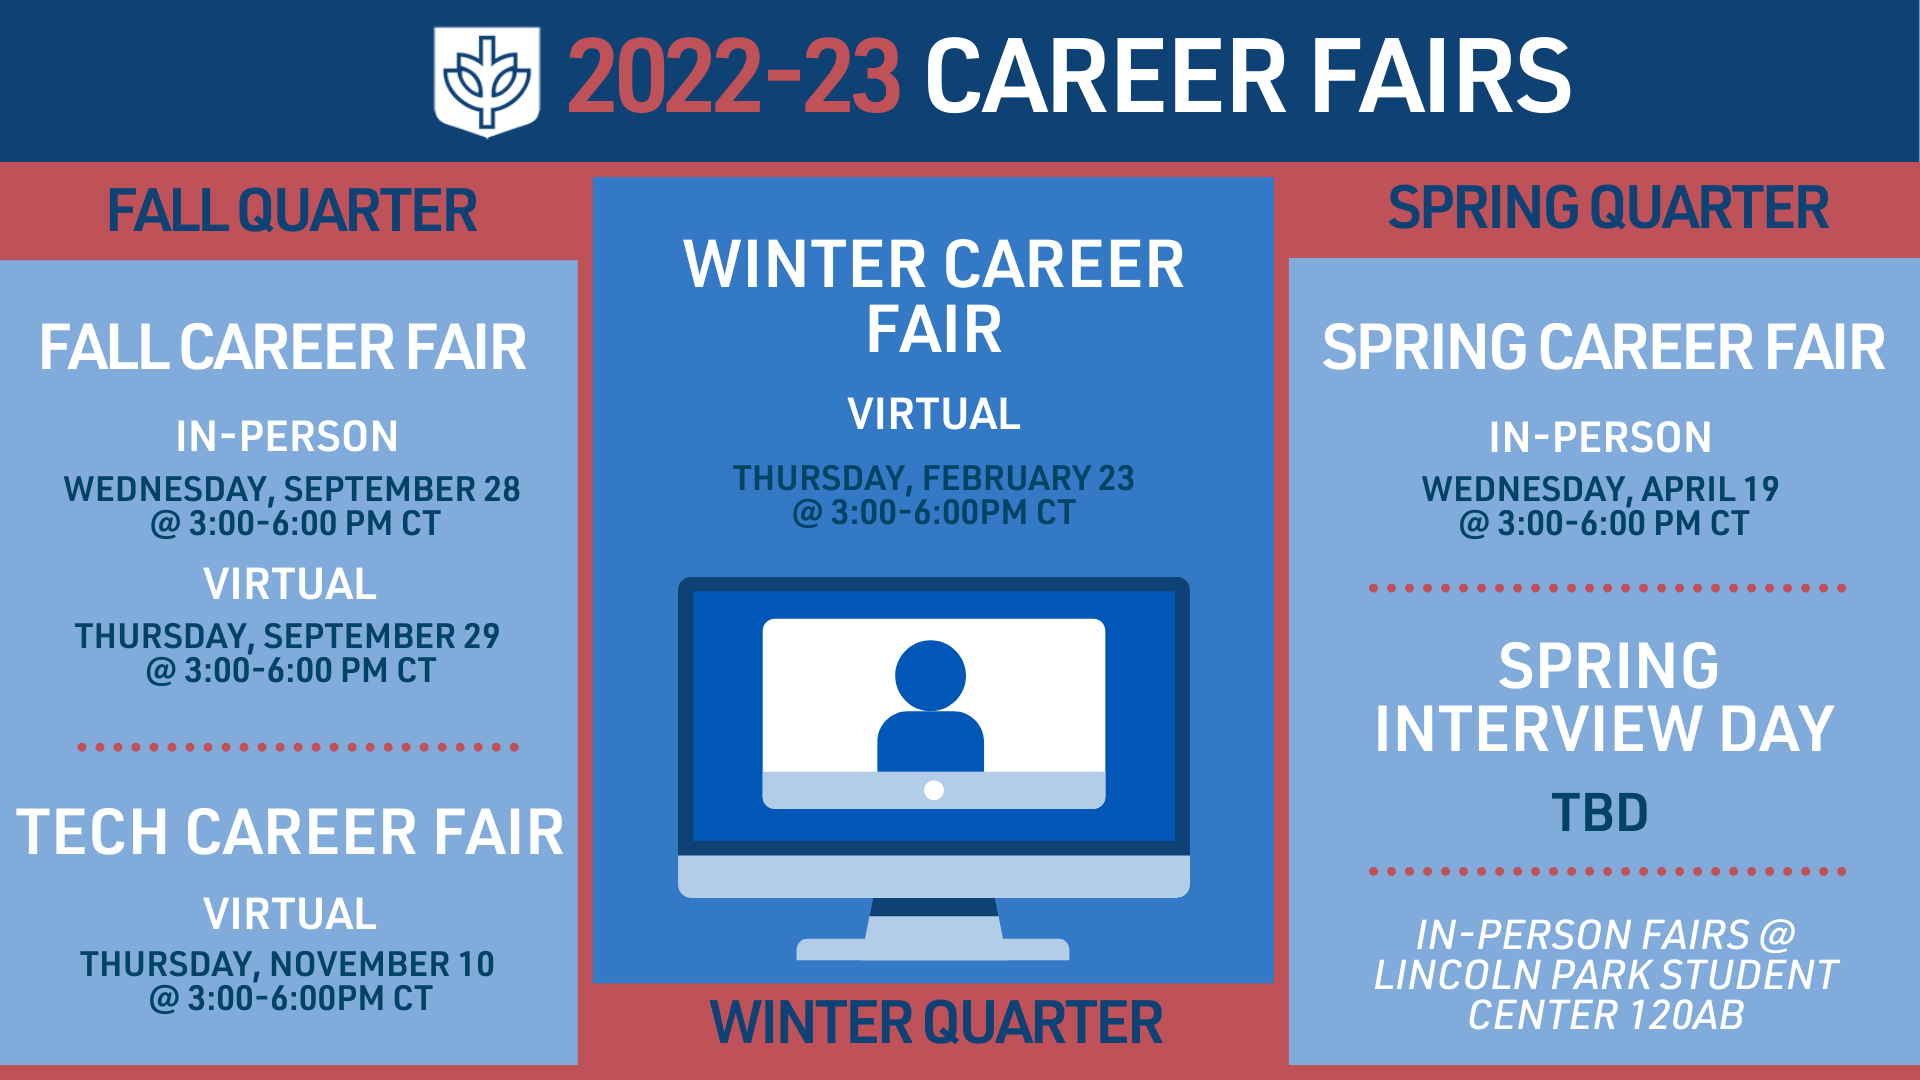 2022-23 Career Fair Schedule